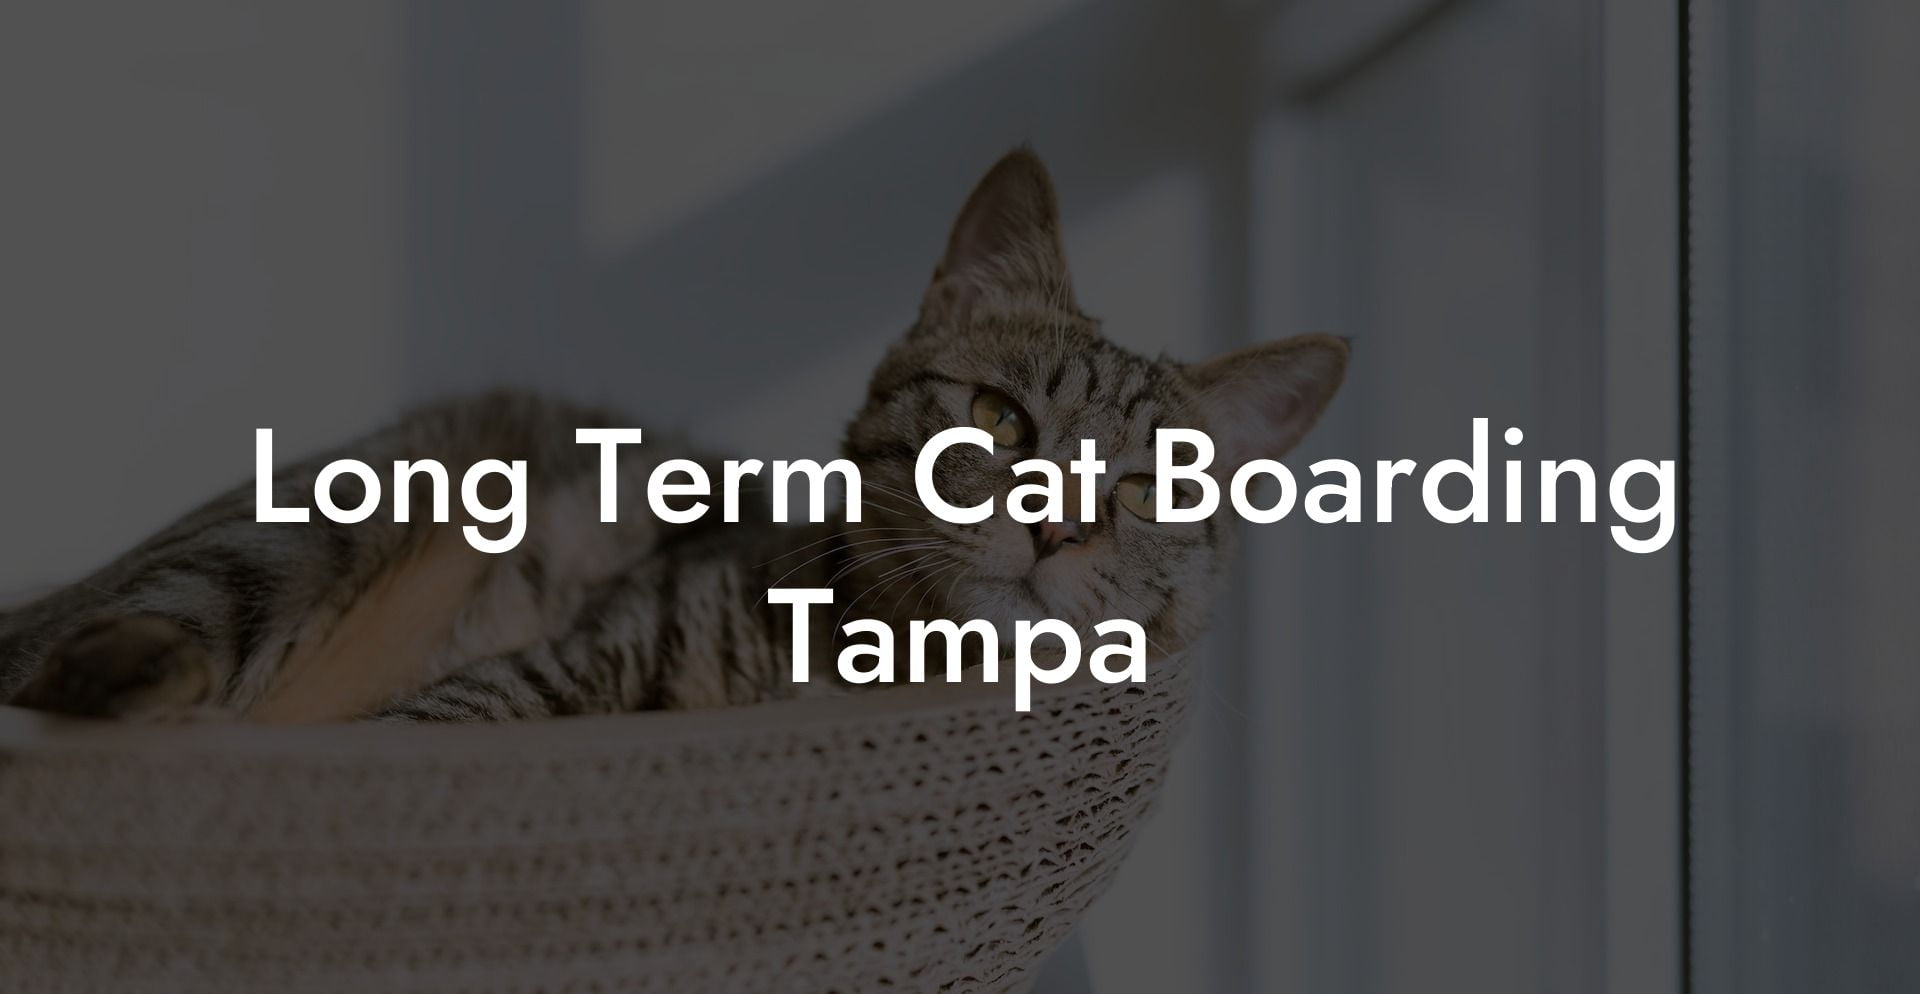 Long Term Cat Boarding Tampa